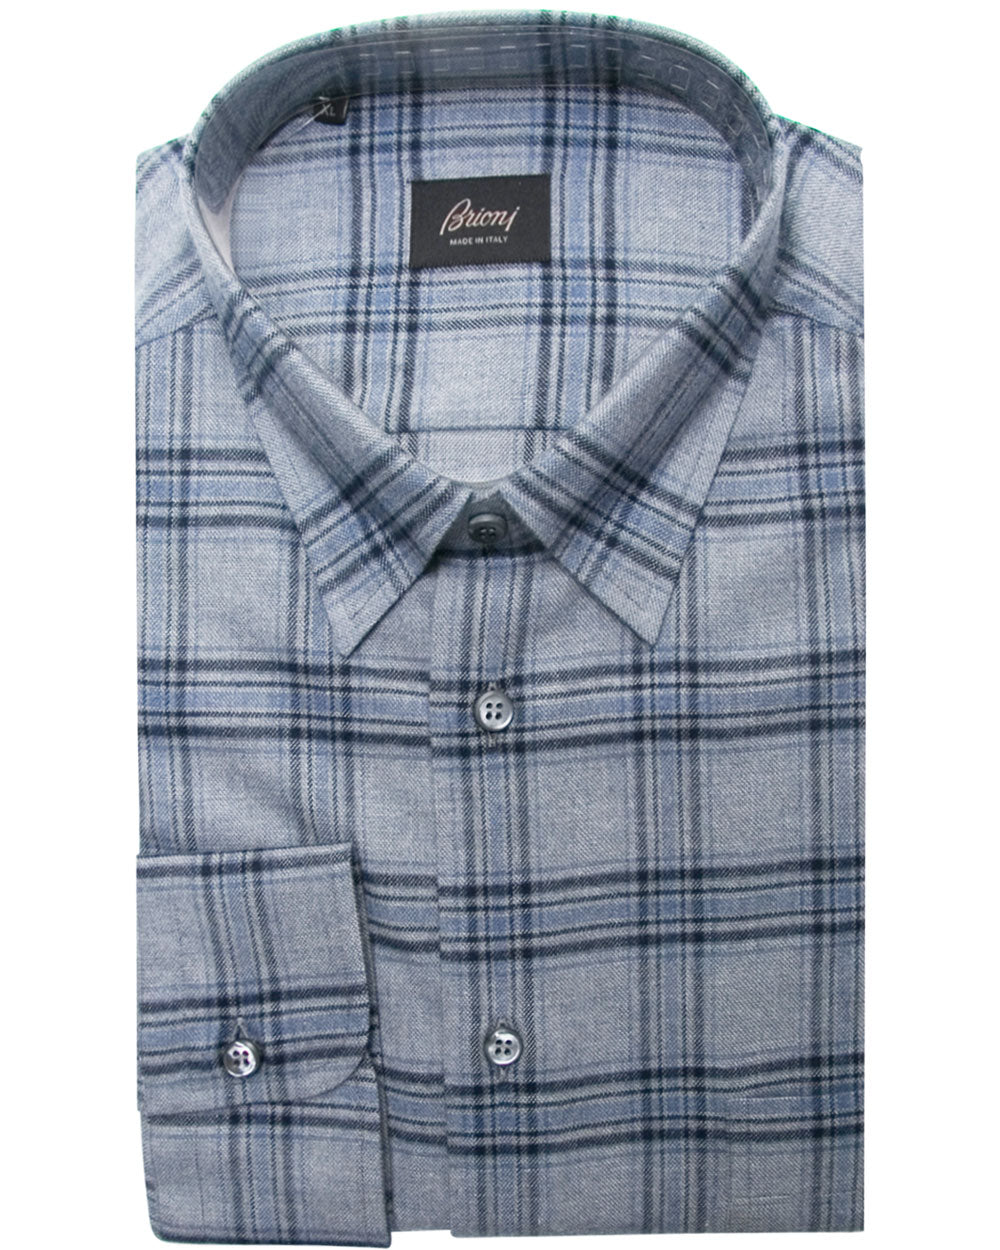 Grey and Blue Plaid Flannel Sport Shirt